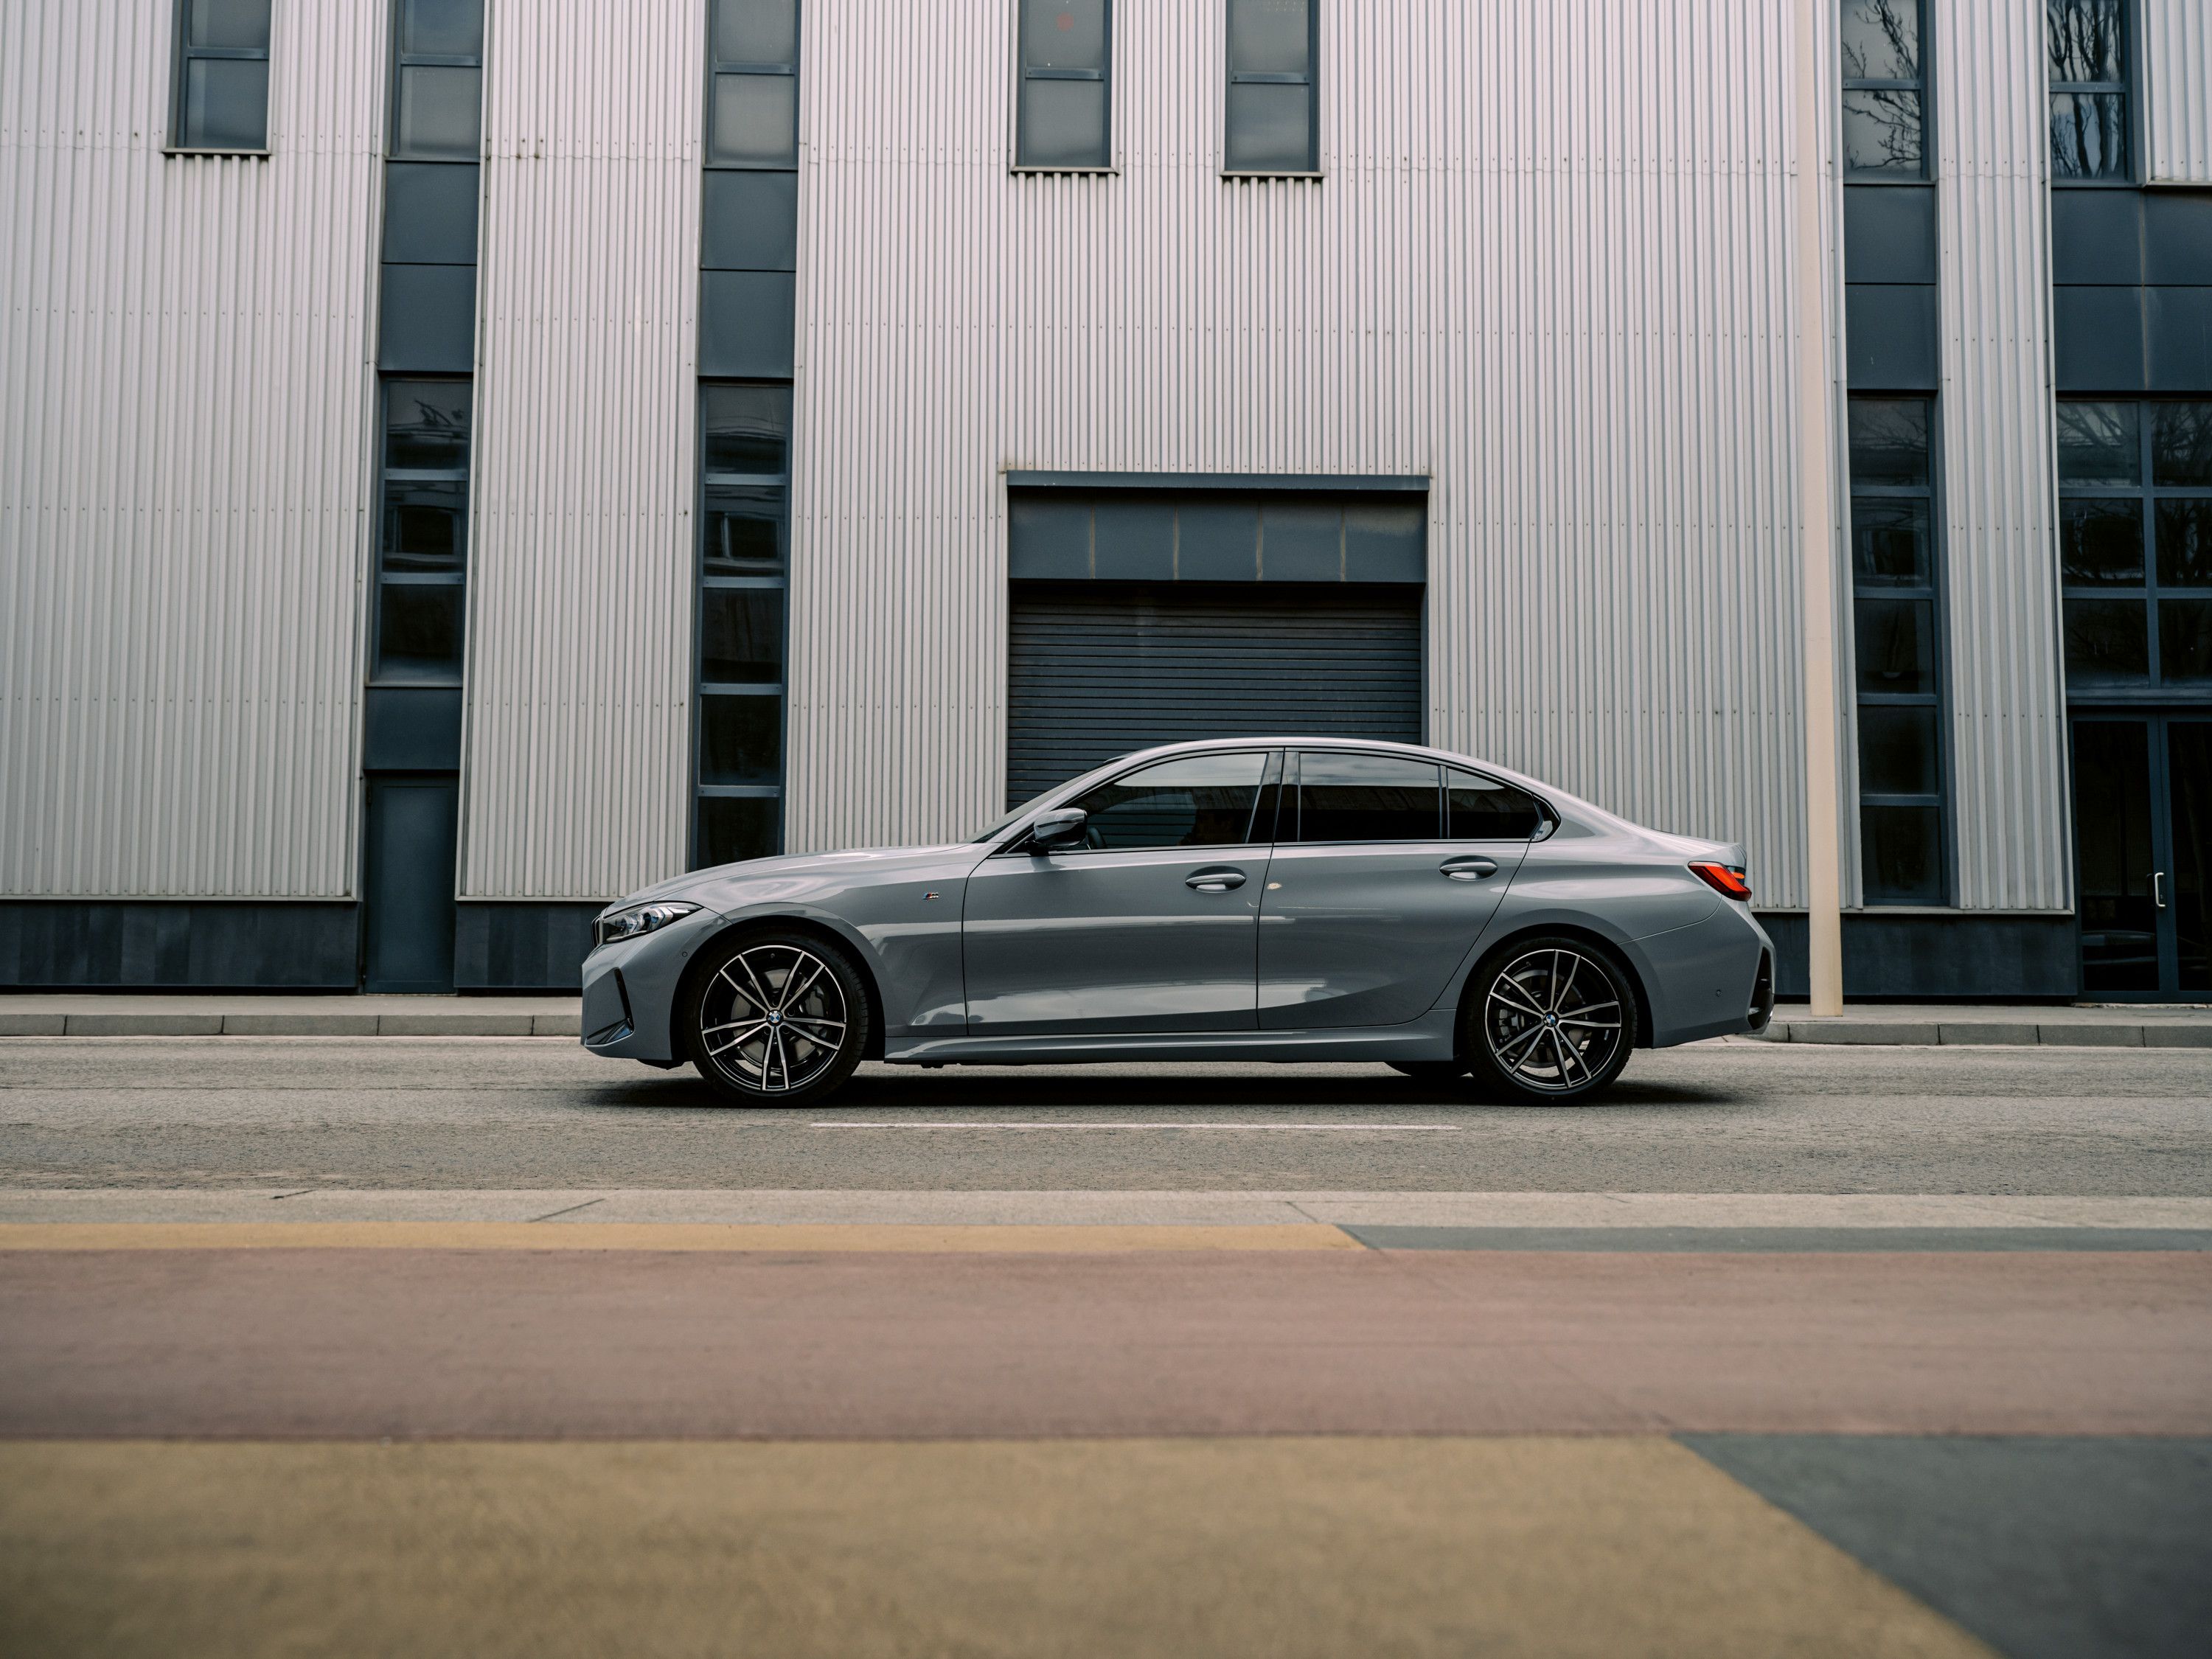 BMW 1er Technische Daten, PS, Motoren, Maße, 0-100, Leistung